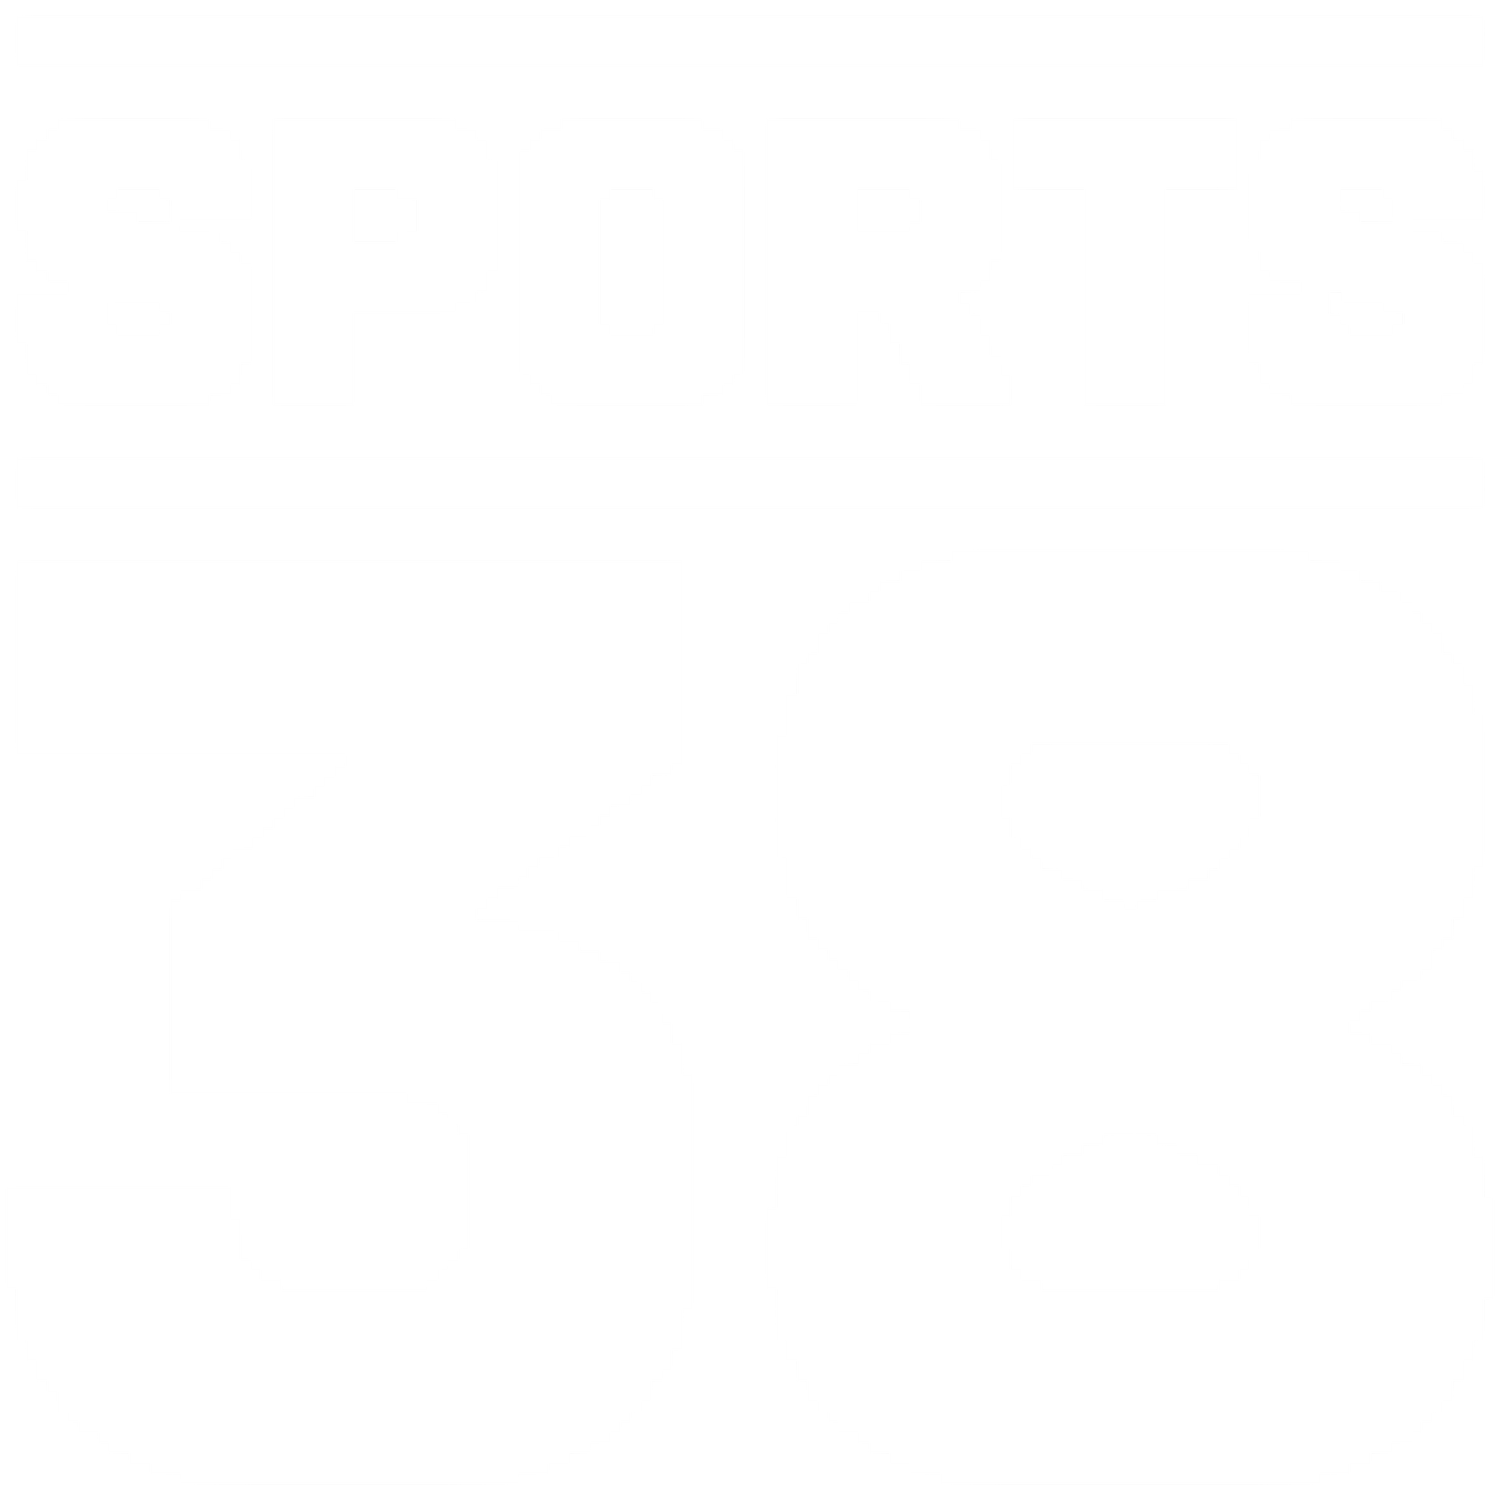 Sports 38